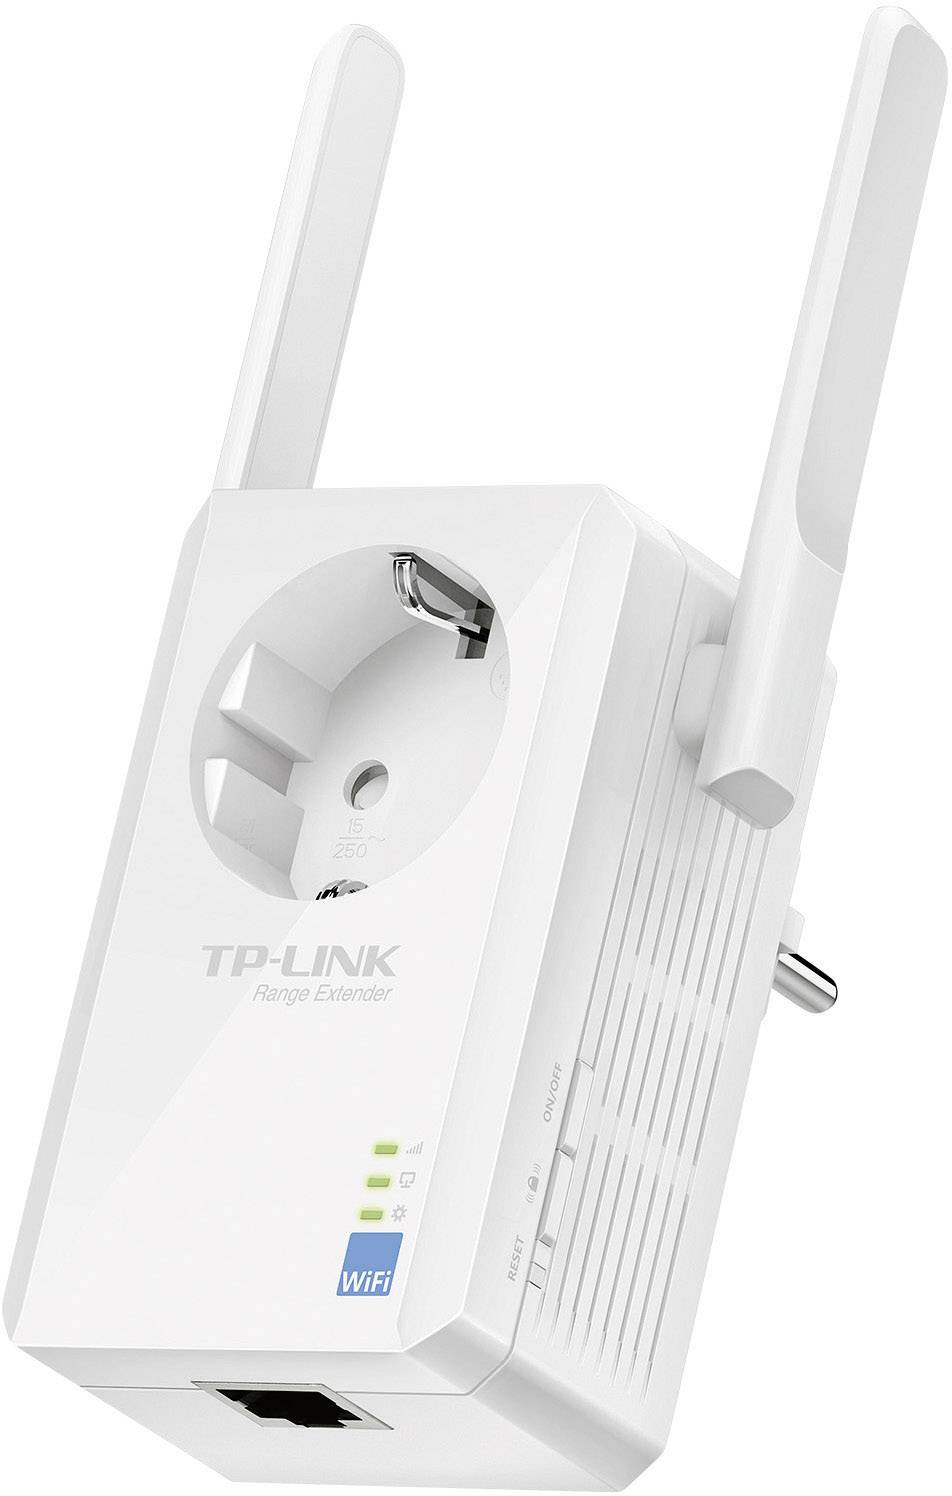 Beweging Civiel Kust TP-LINK TL-WA860RE WiFi-versterker 300 MBit/s 2.4 GHz | Conrad.nl